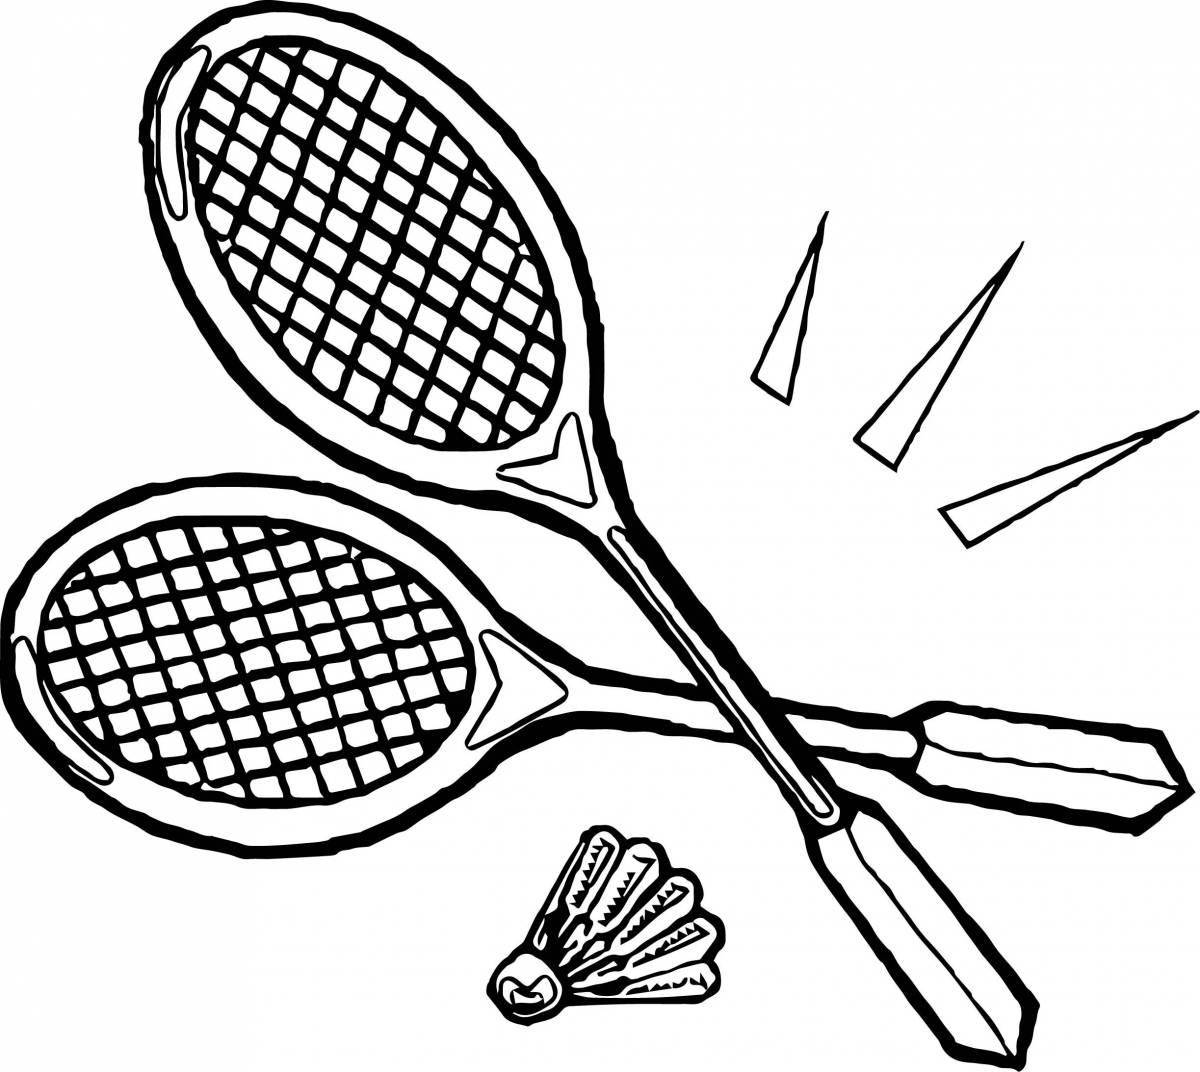 Tennis racket fun coloring